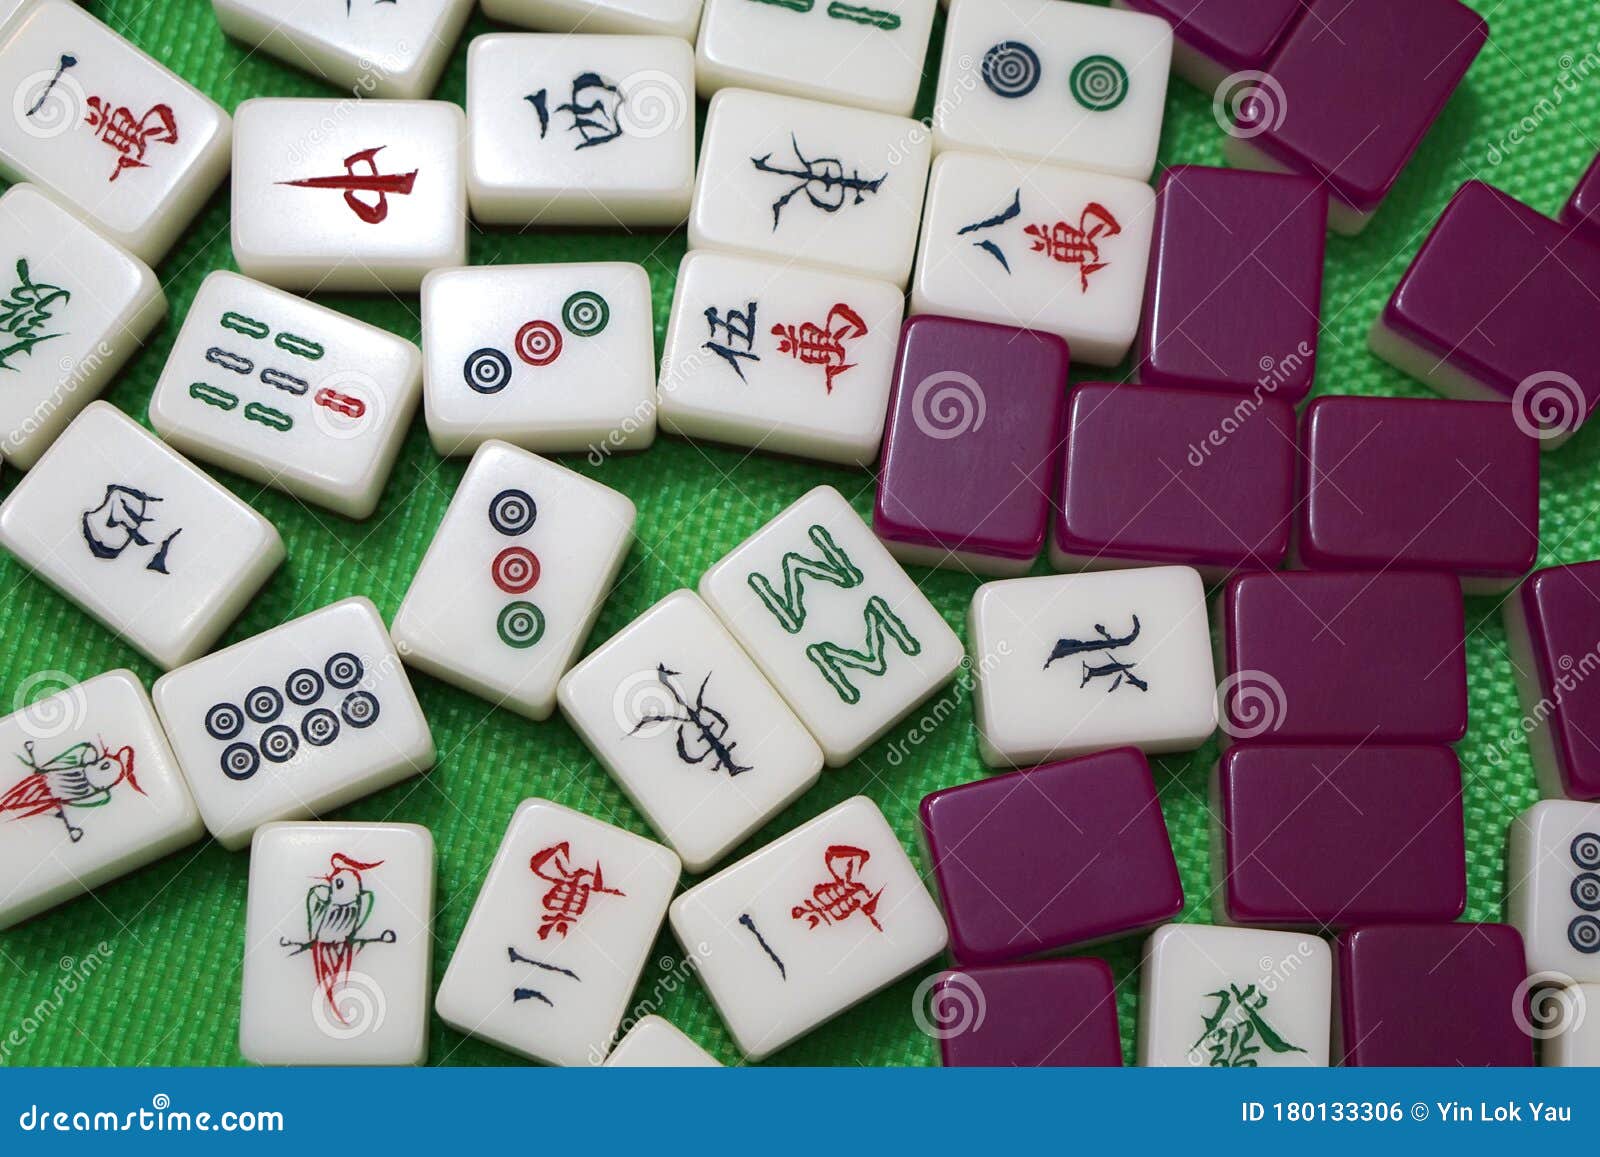 Mahjong - Play Game for Free - GameTop